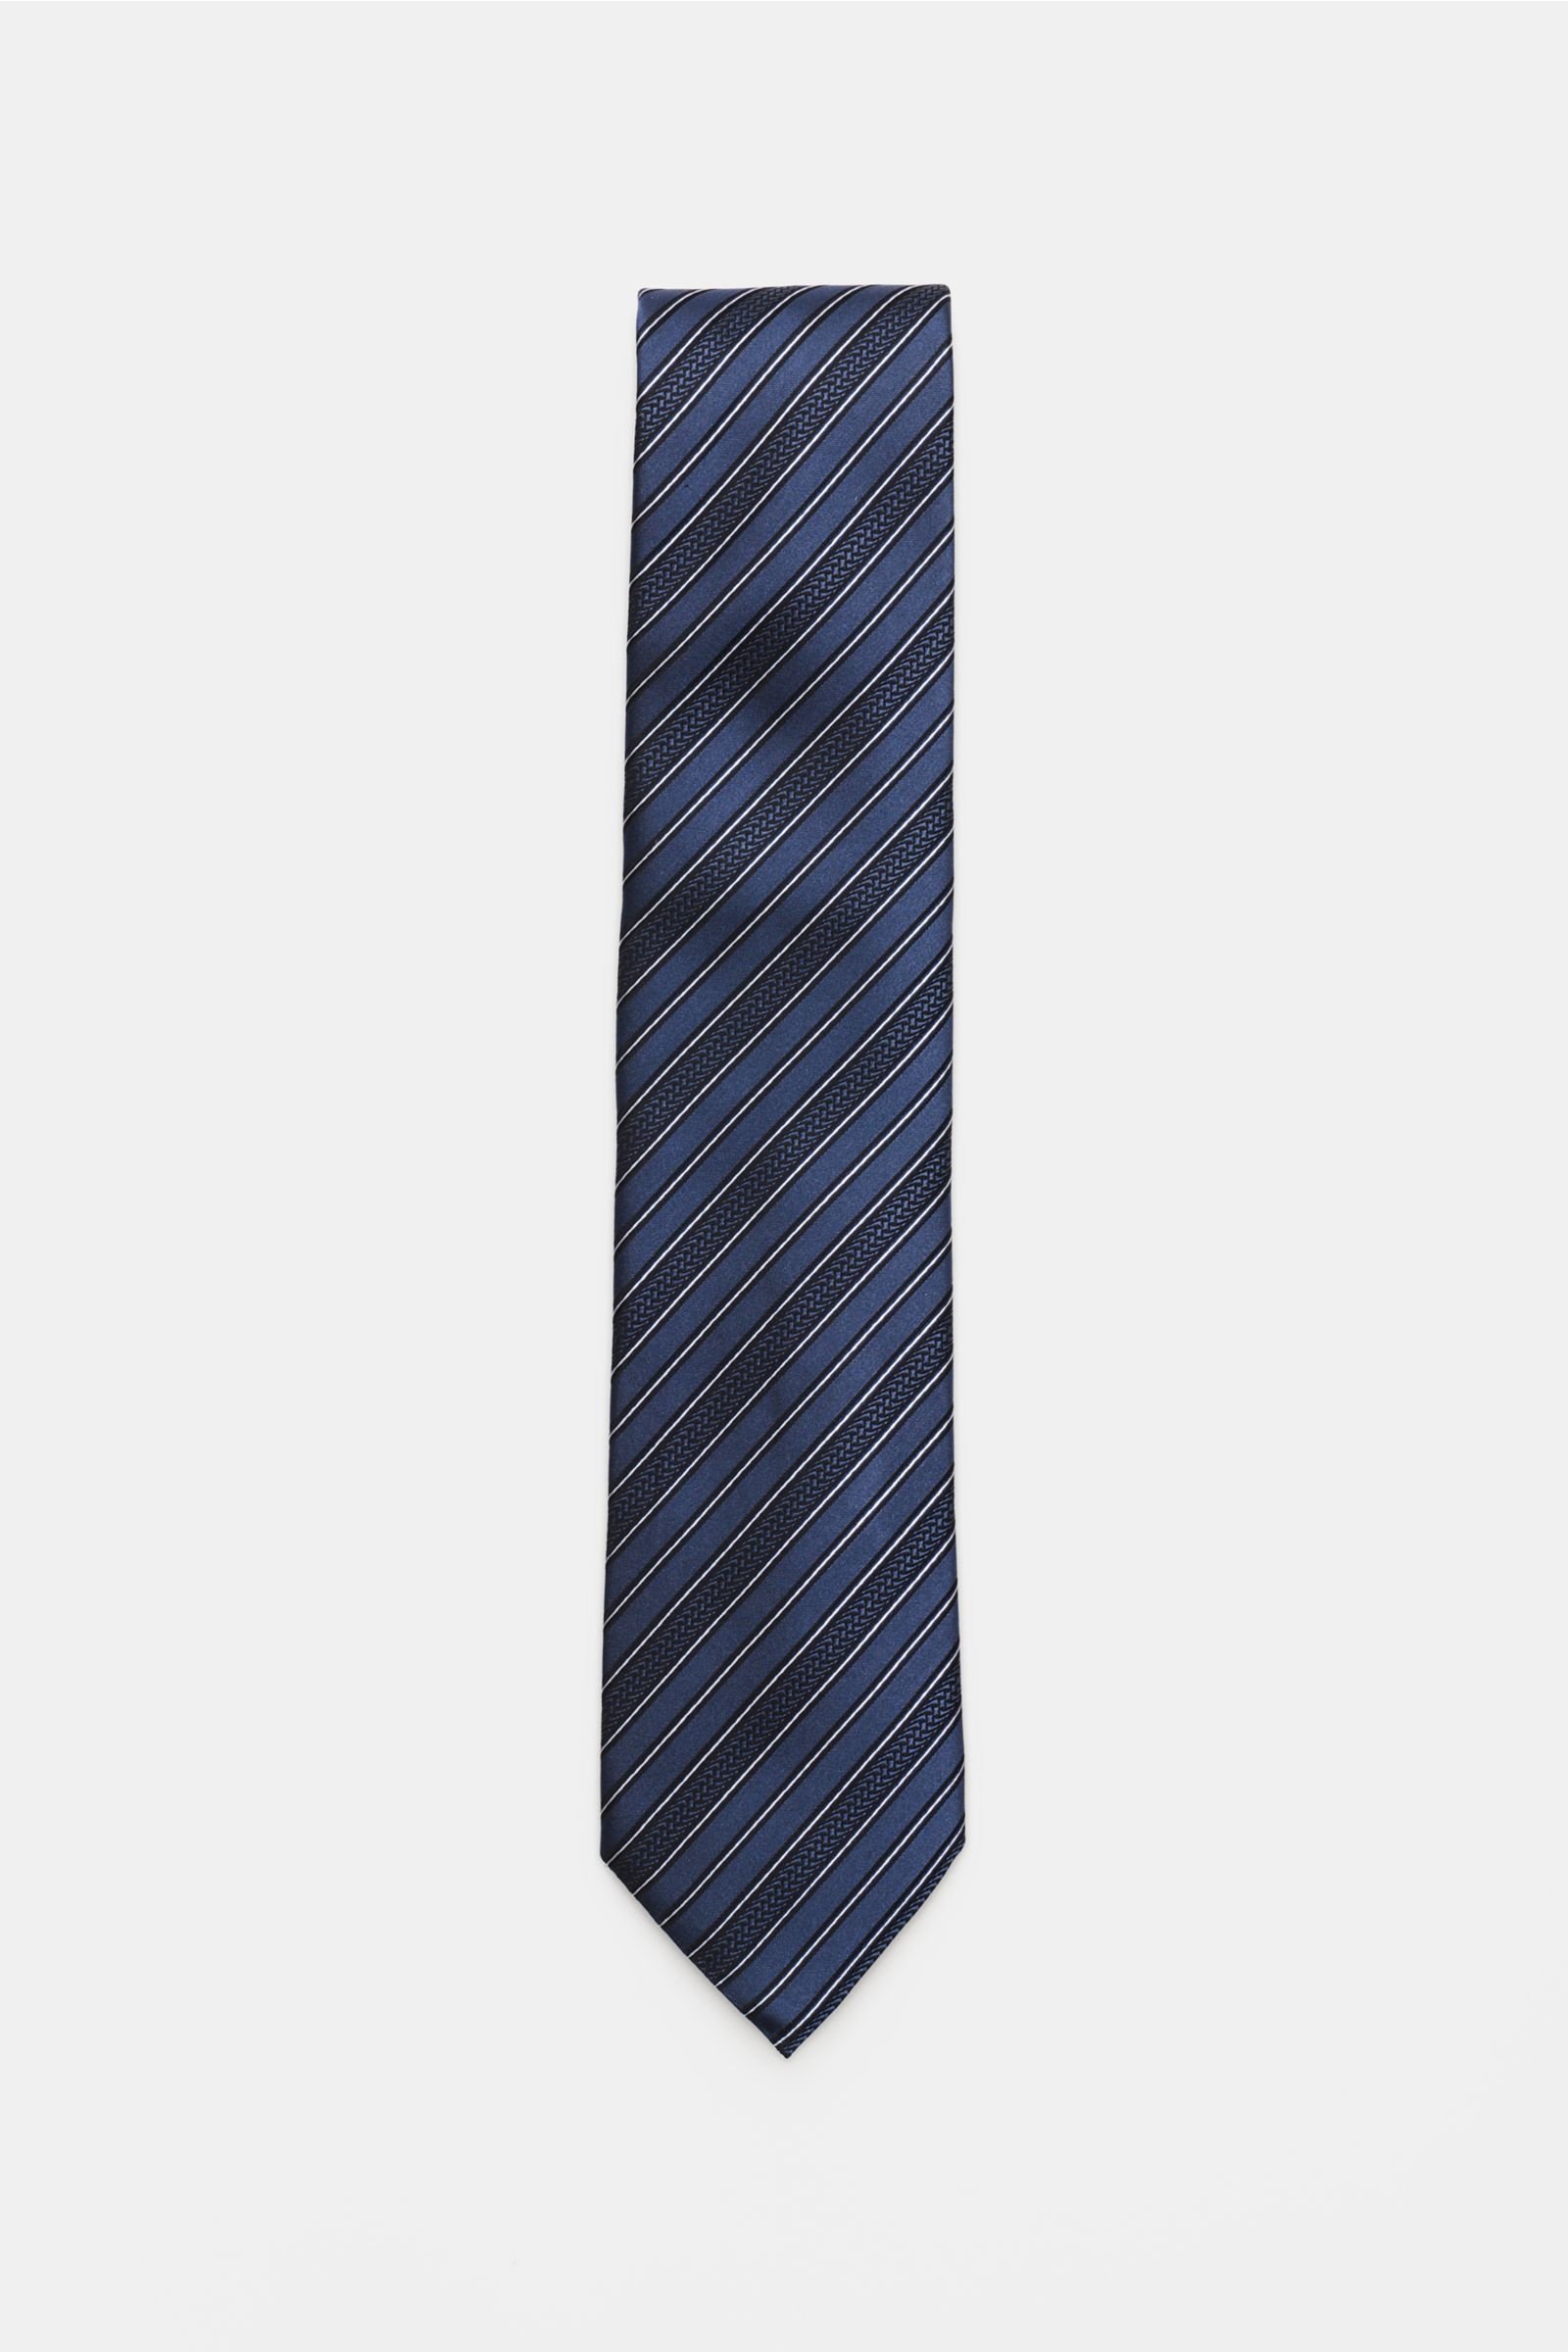 Silk tie grey-blue striped